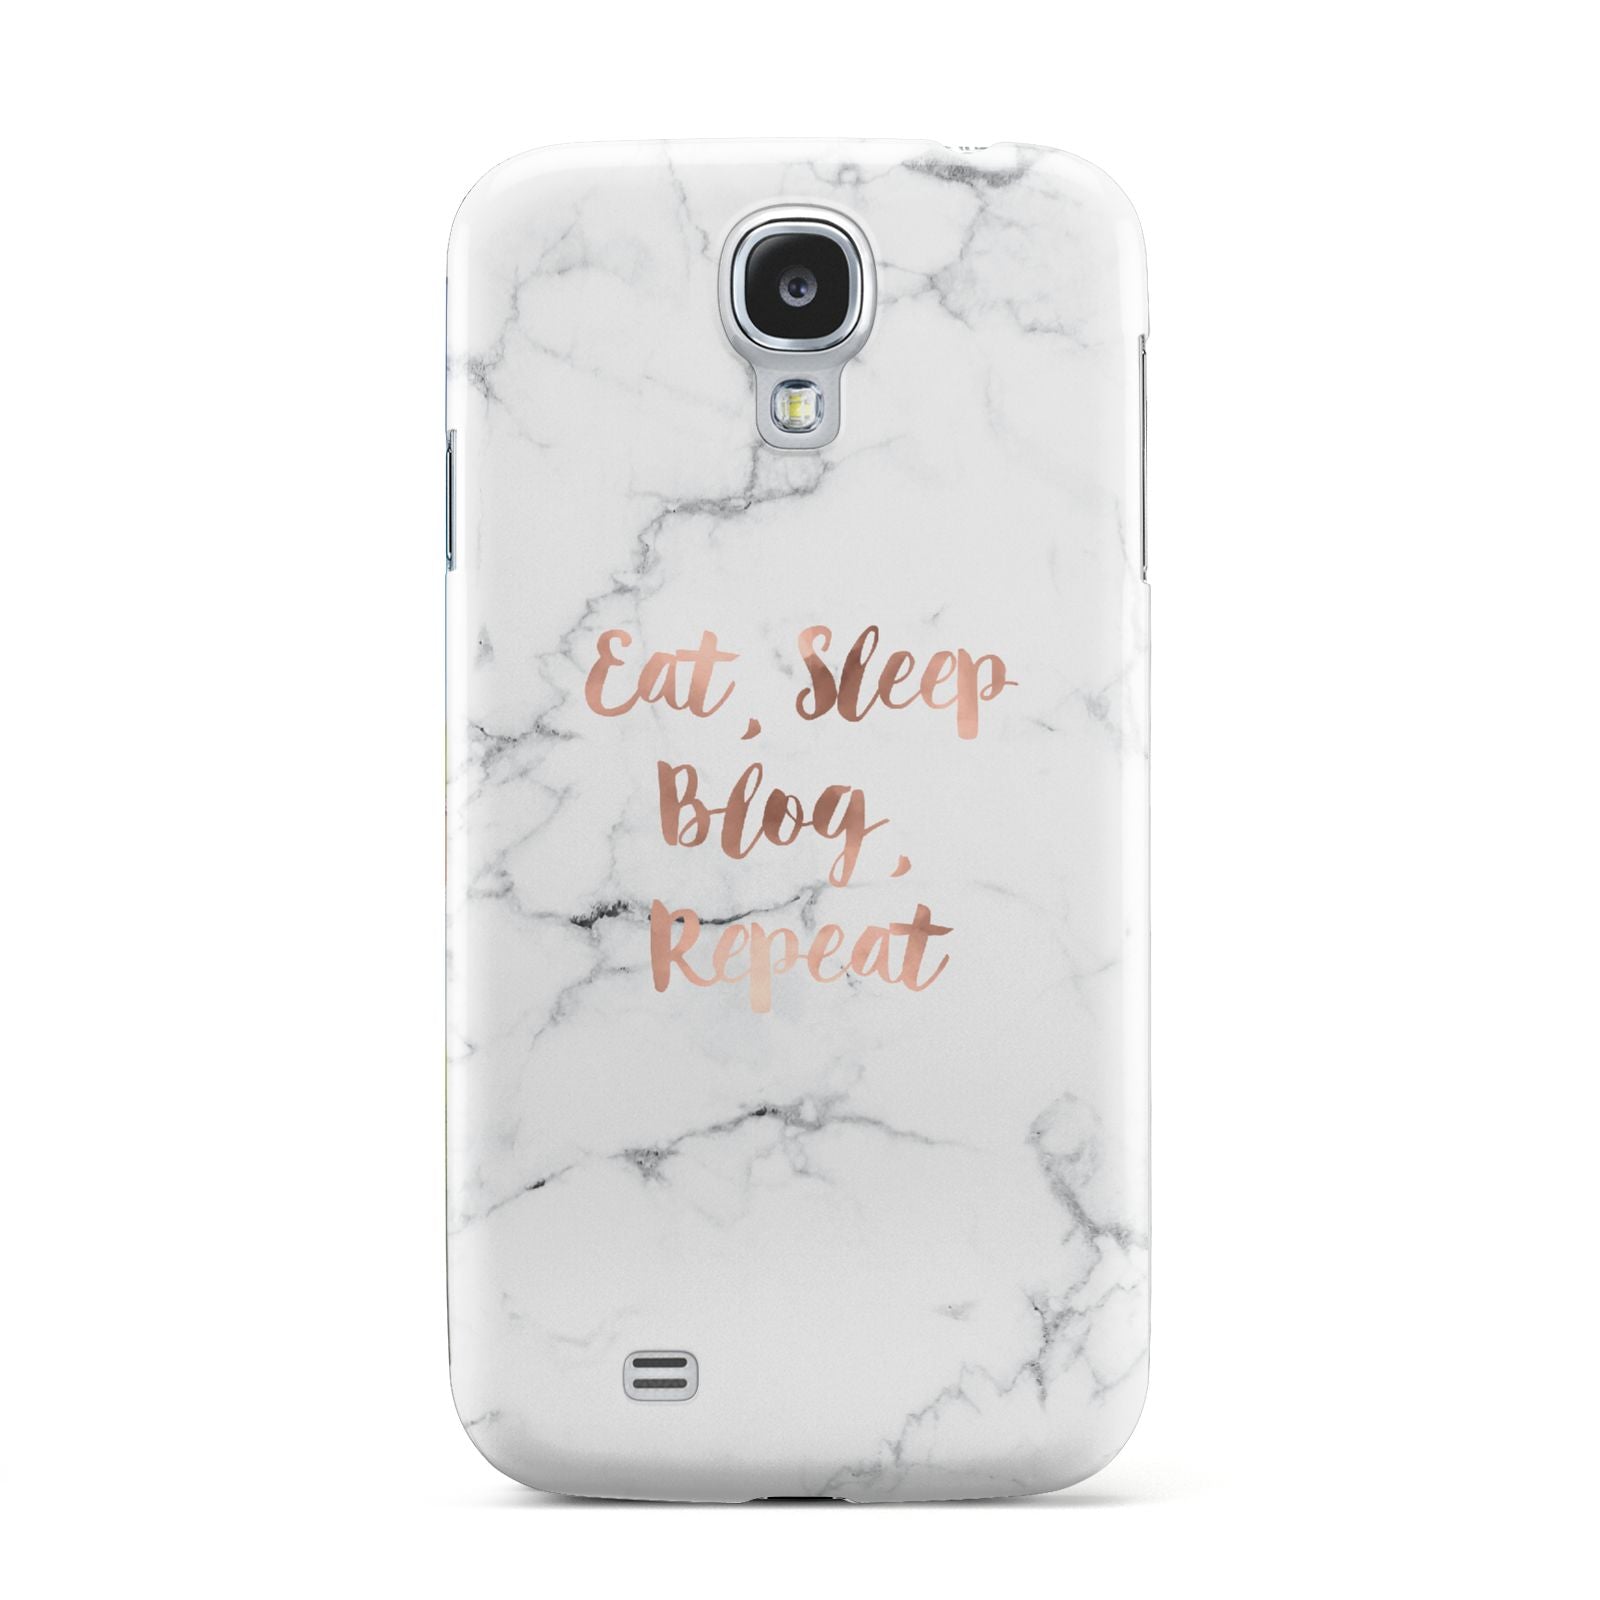 Eat Sleep Blog Repeat Marble Effect Samsung Galaxy S4 Case